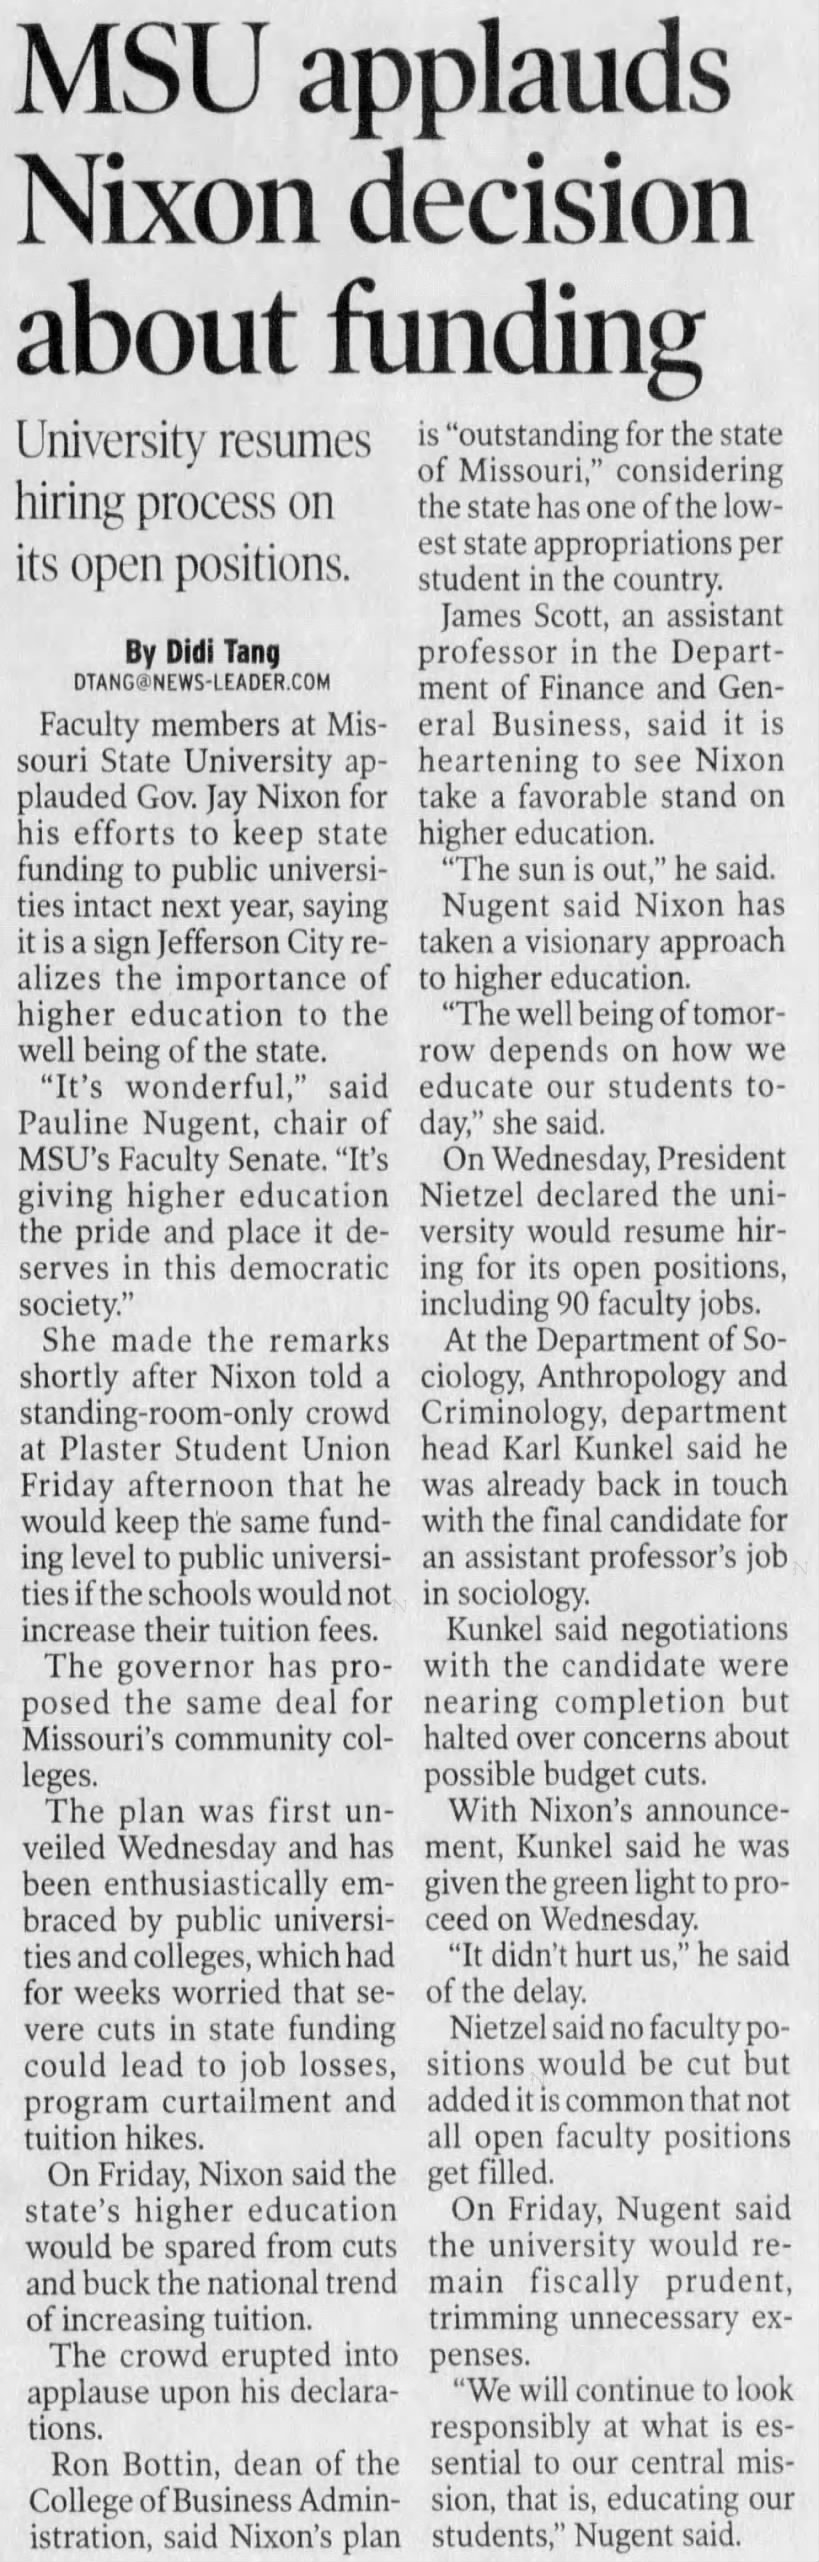 MSU applauds Nixon decision about funding